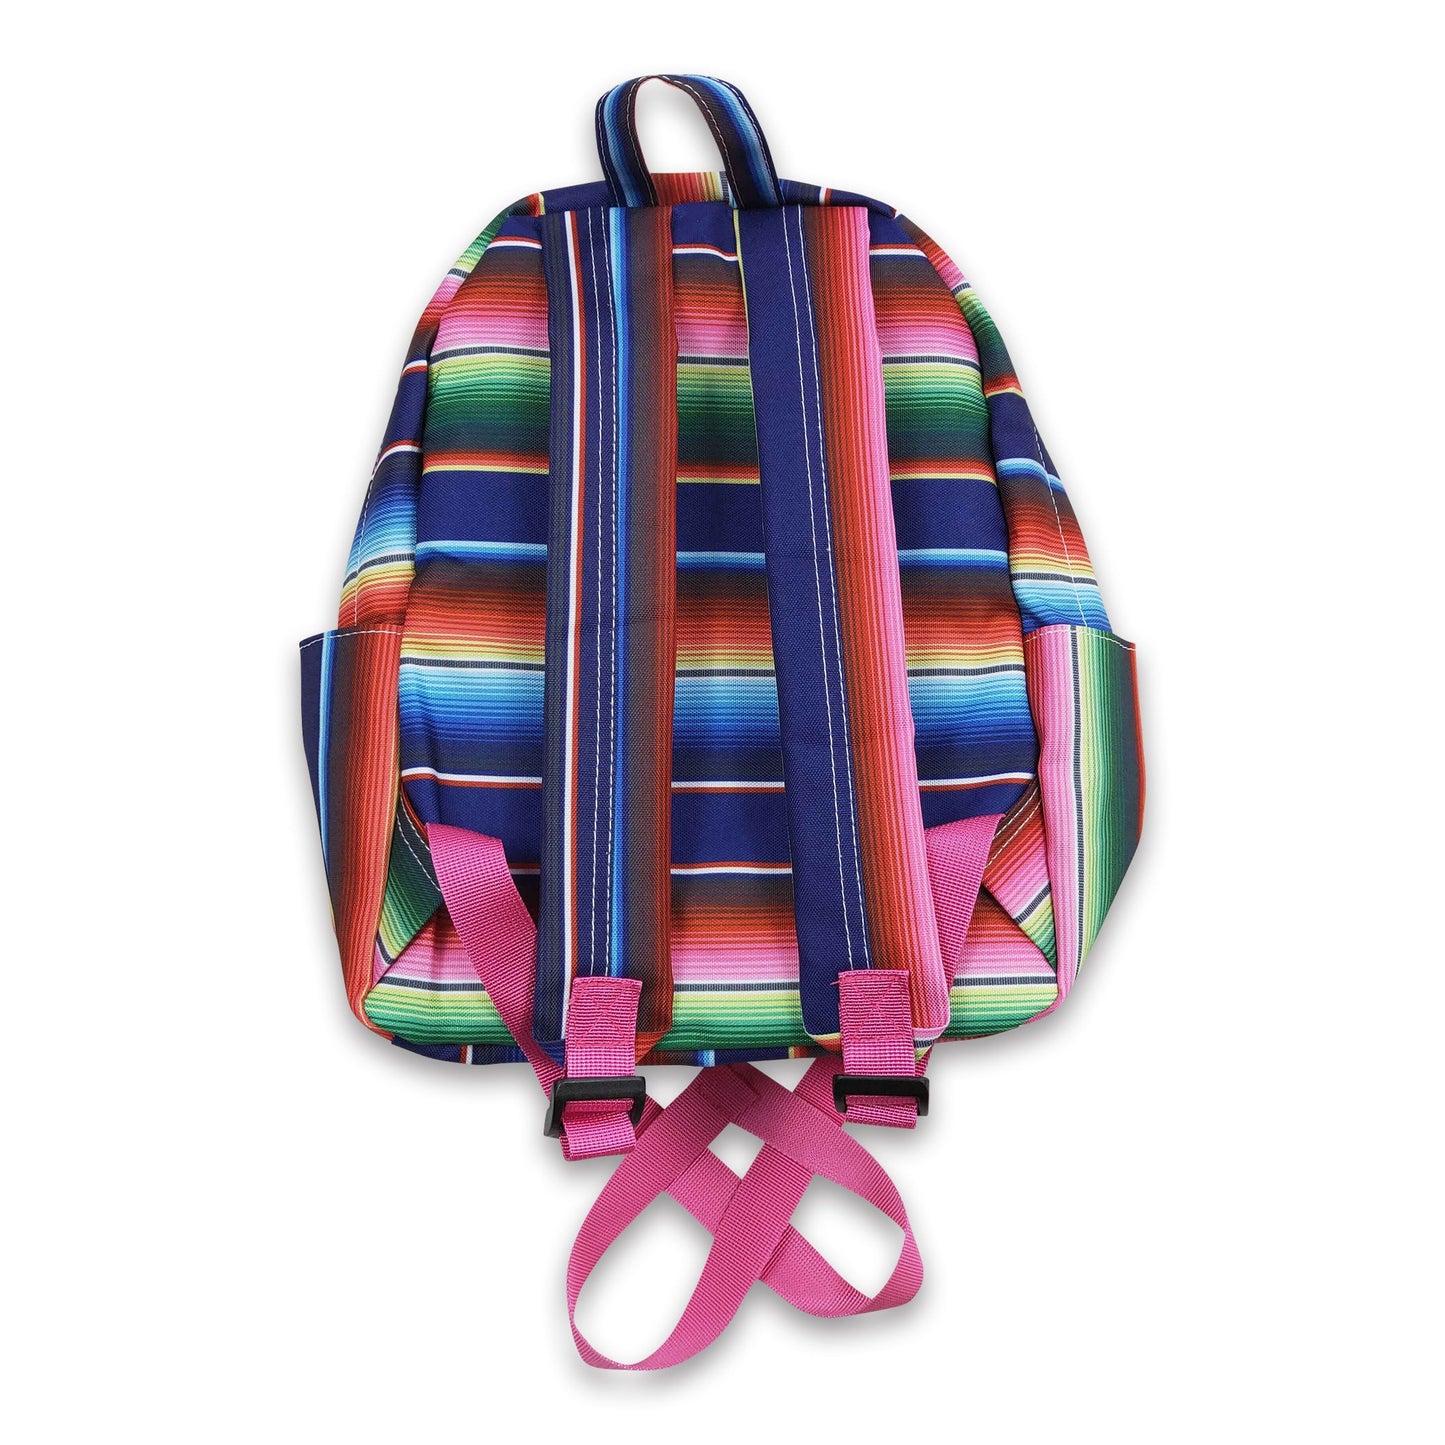 Green blue stripe western backpack kids back to school bags